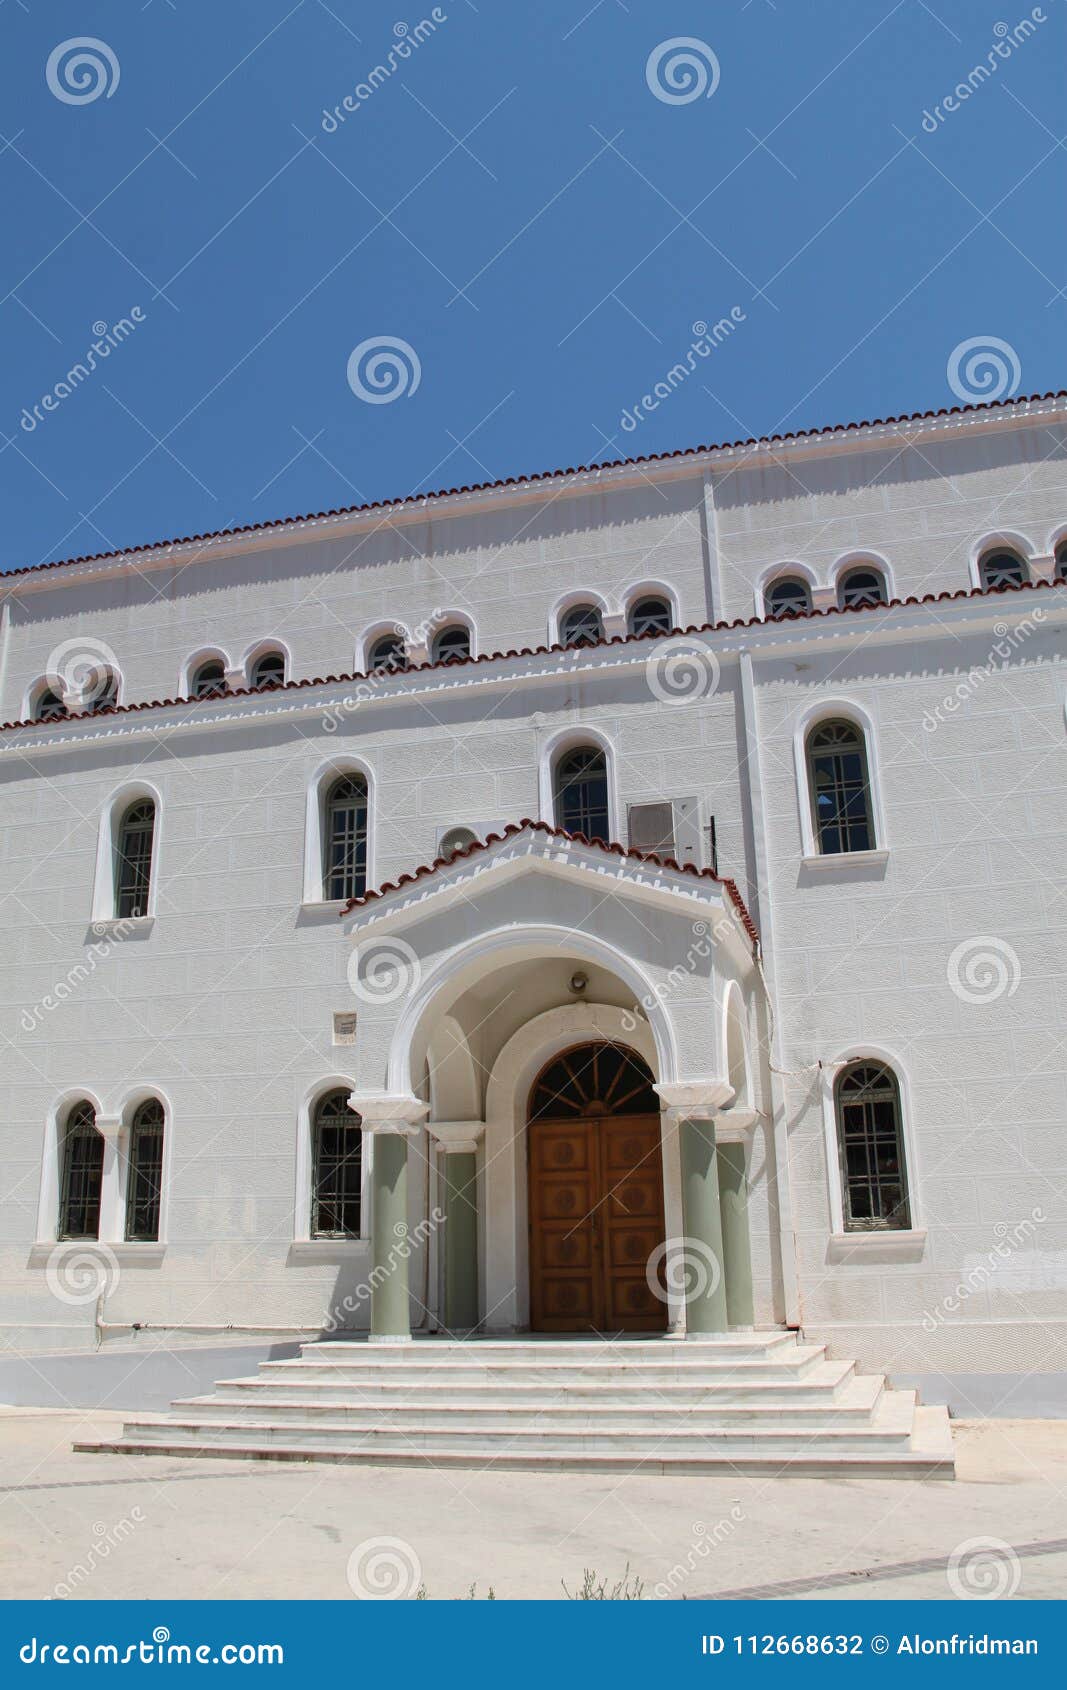 megalos antonios church in rethymnon city on the island of crete, greece